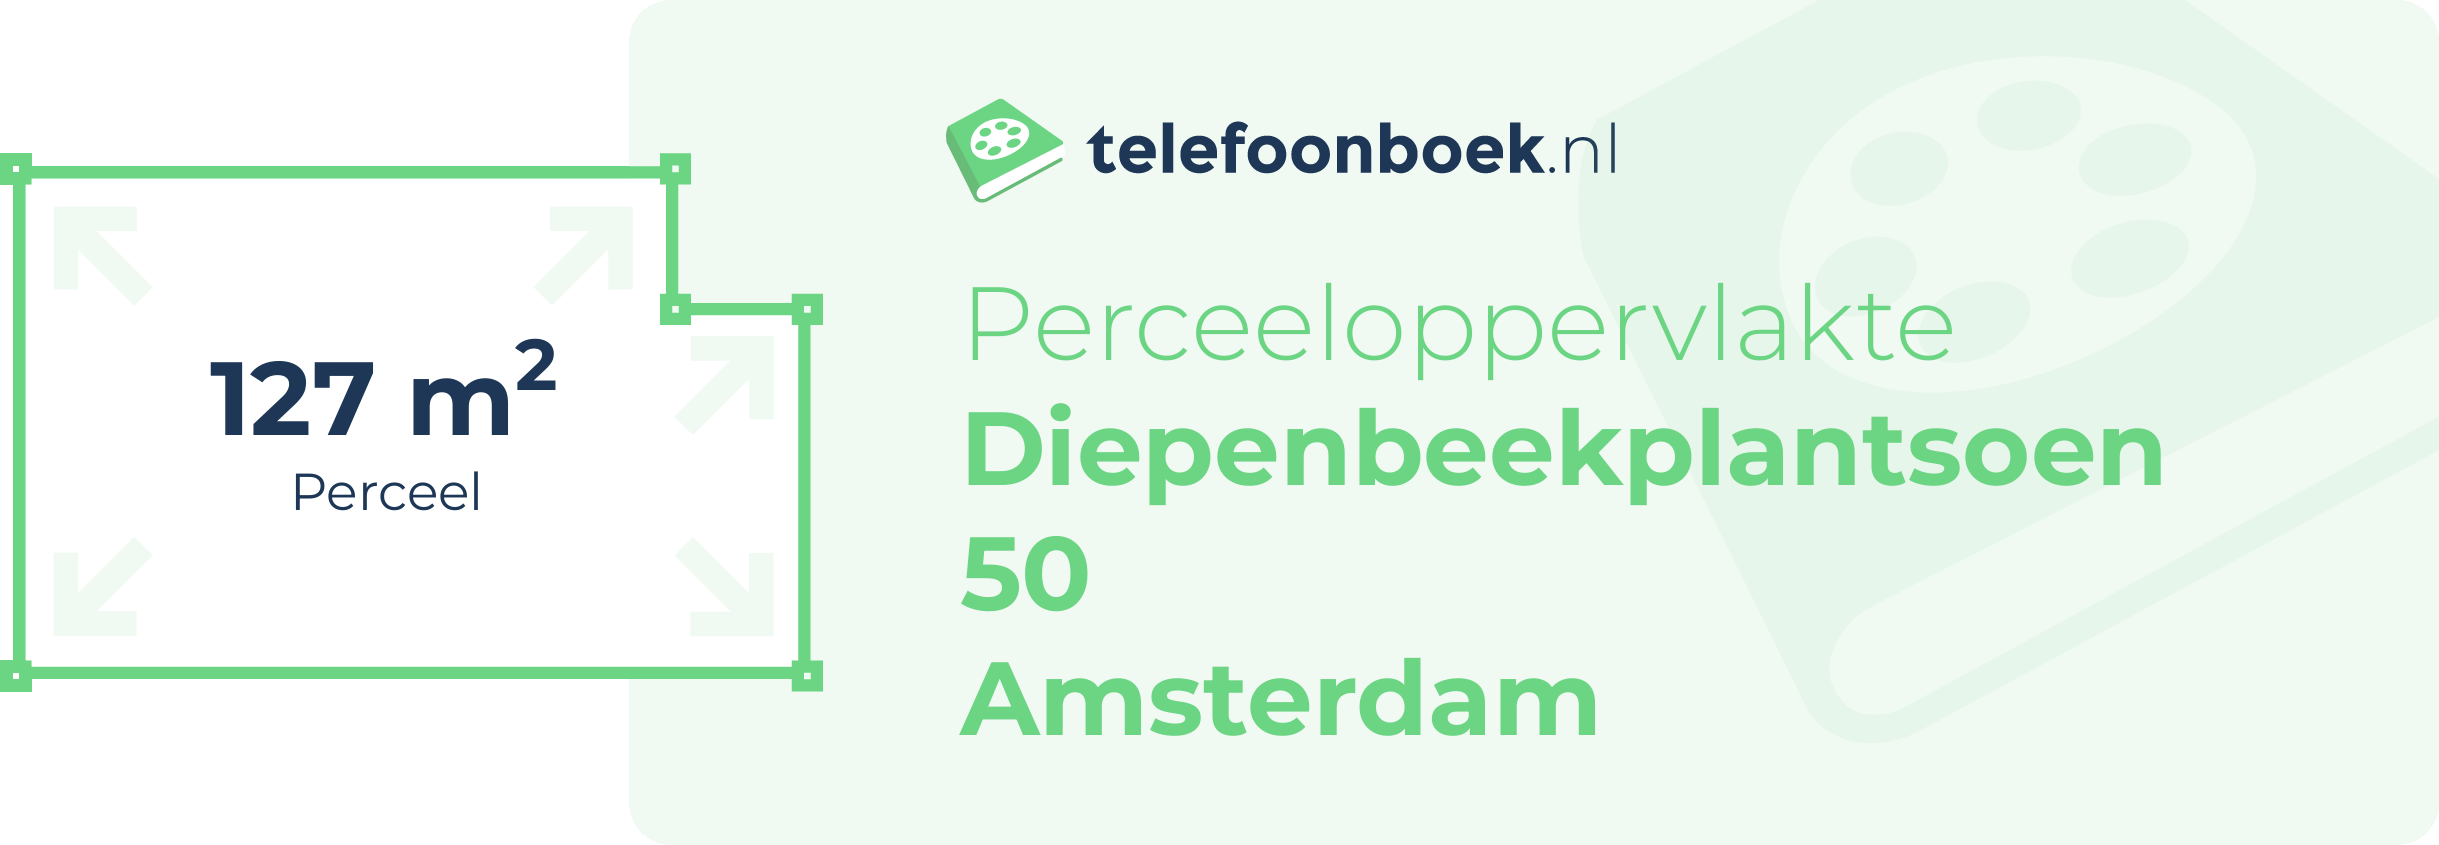 Perceeloppervlakte Diepenbeekplantsoen 50 Amsterdam